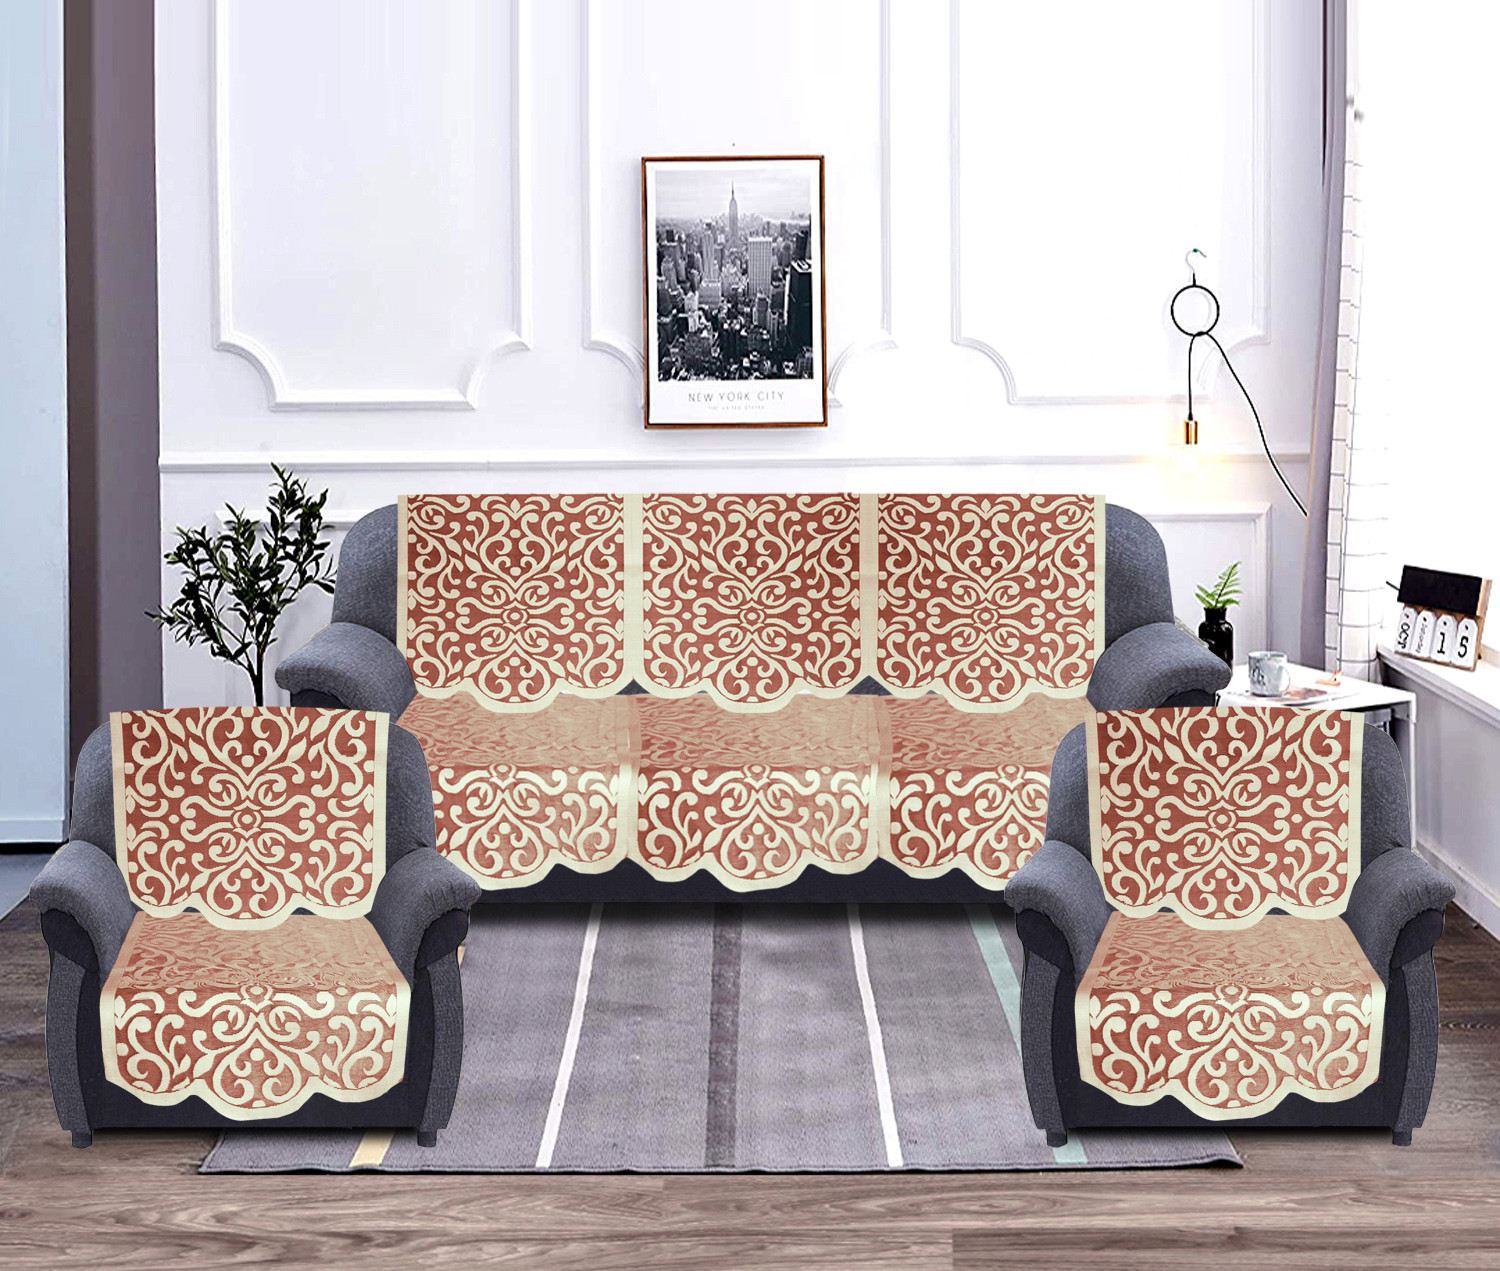 Kuber Industries Artcam Design 5 Seater Cotton Sofa Cover Set (Maroon)